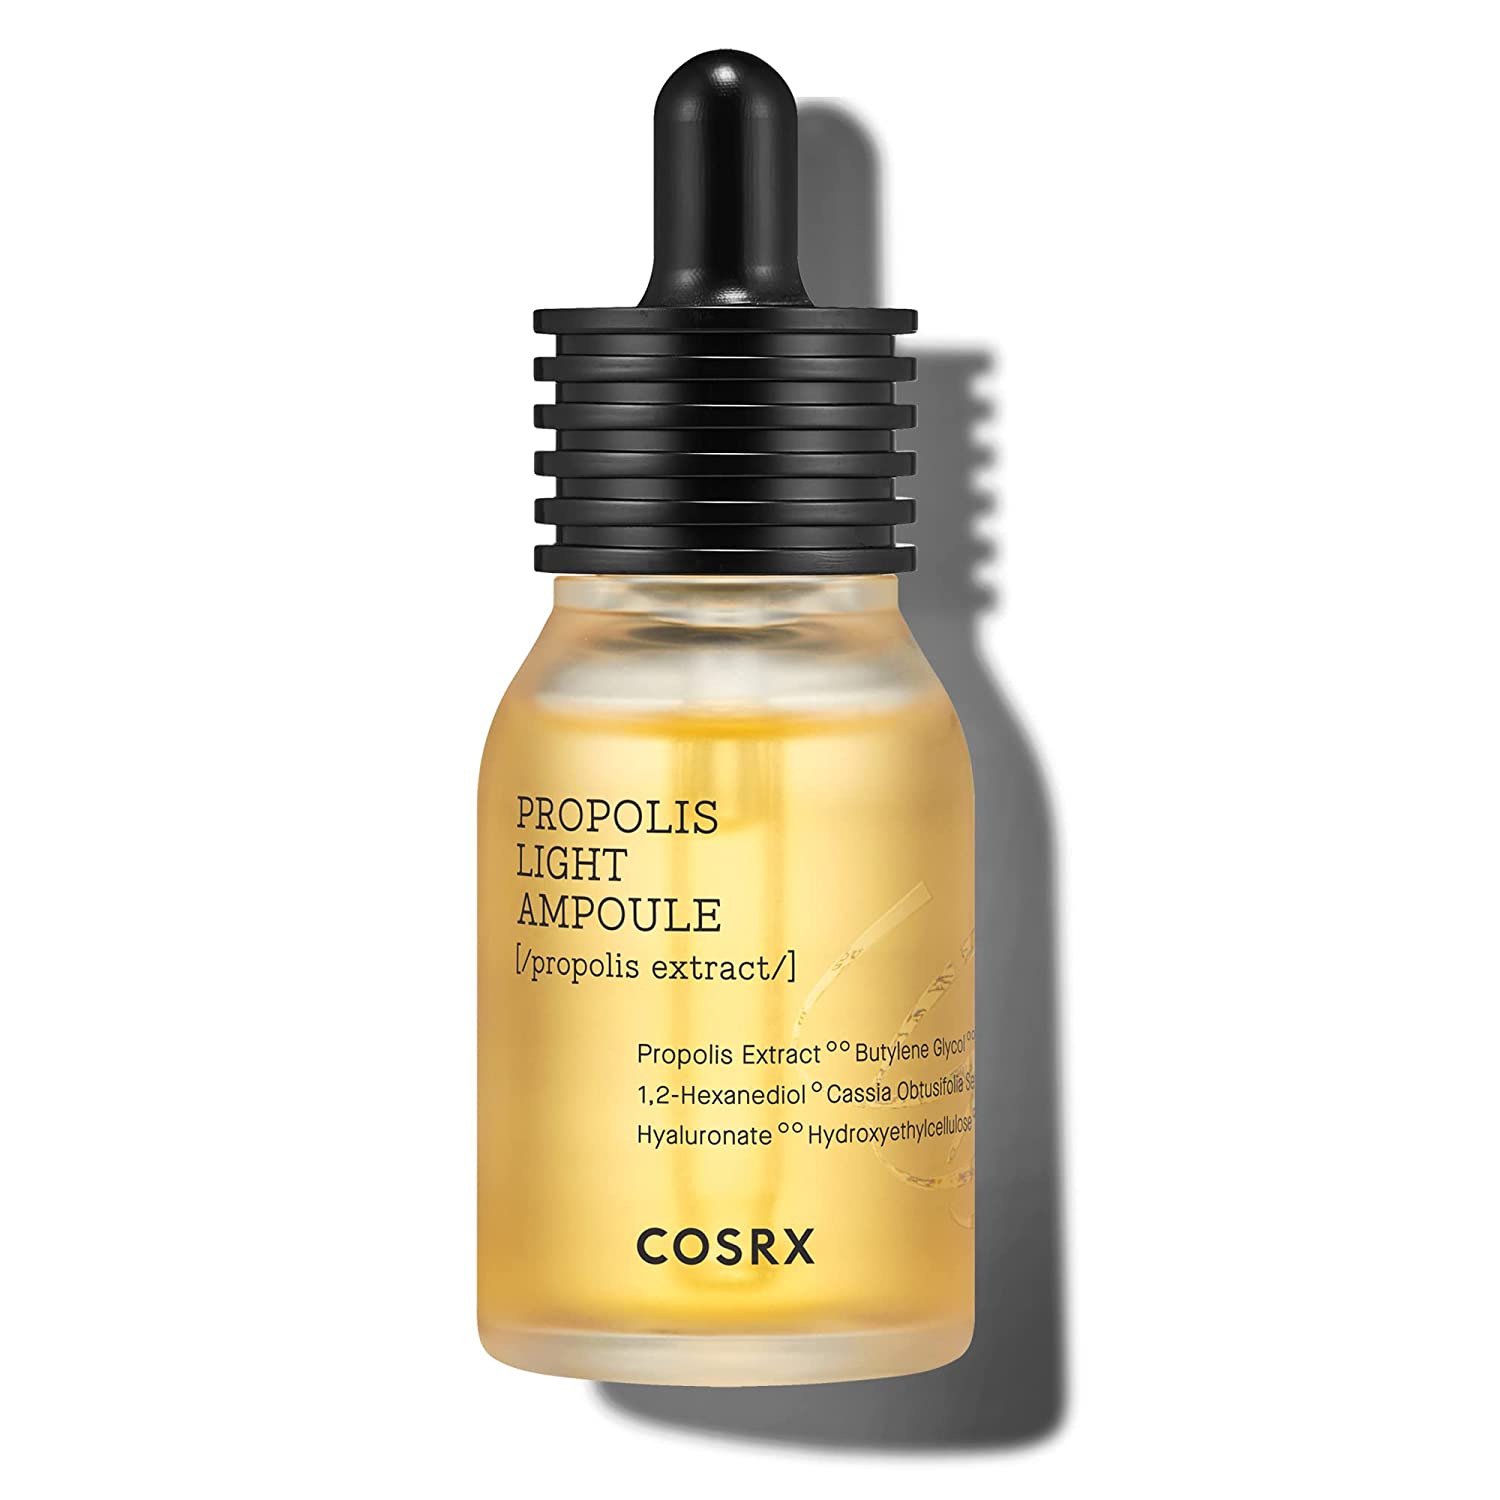 COSRX Full Fit Light Ampoule - veido ampulė serumas su propoliu - odoscentras.lt